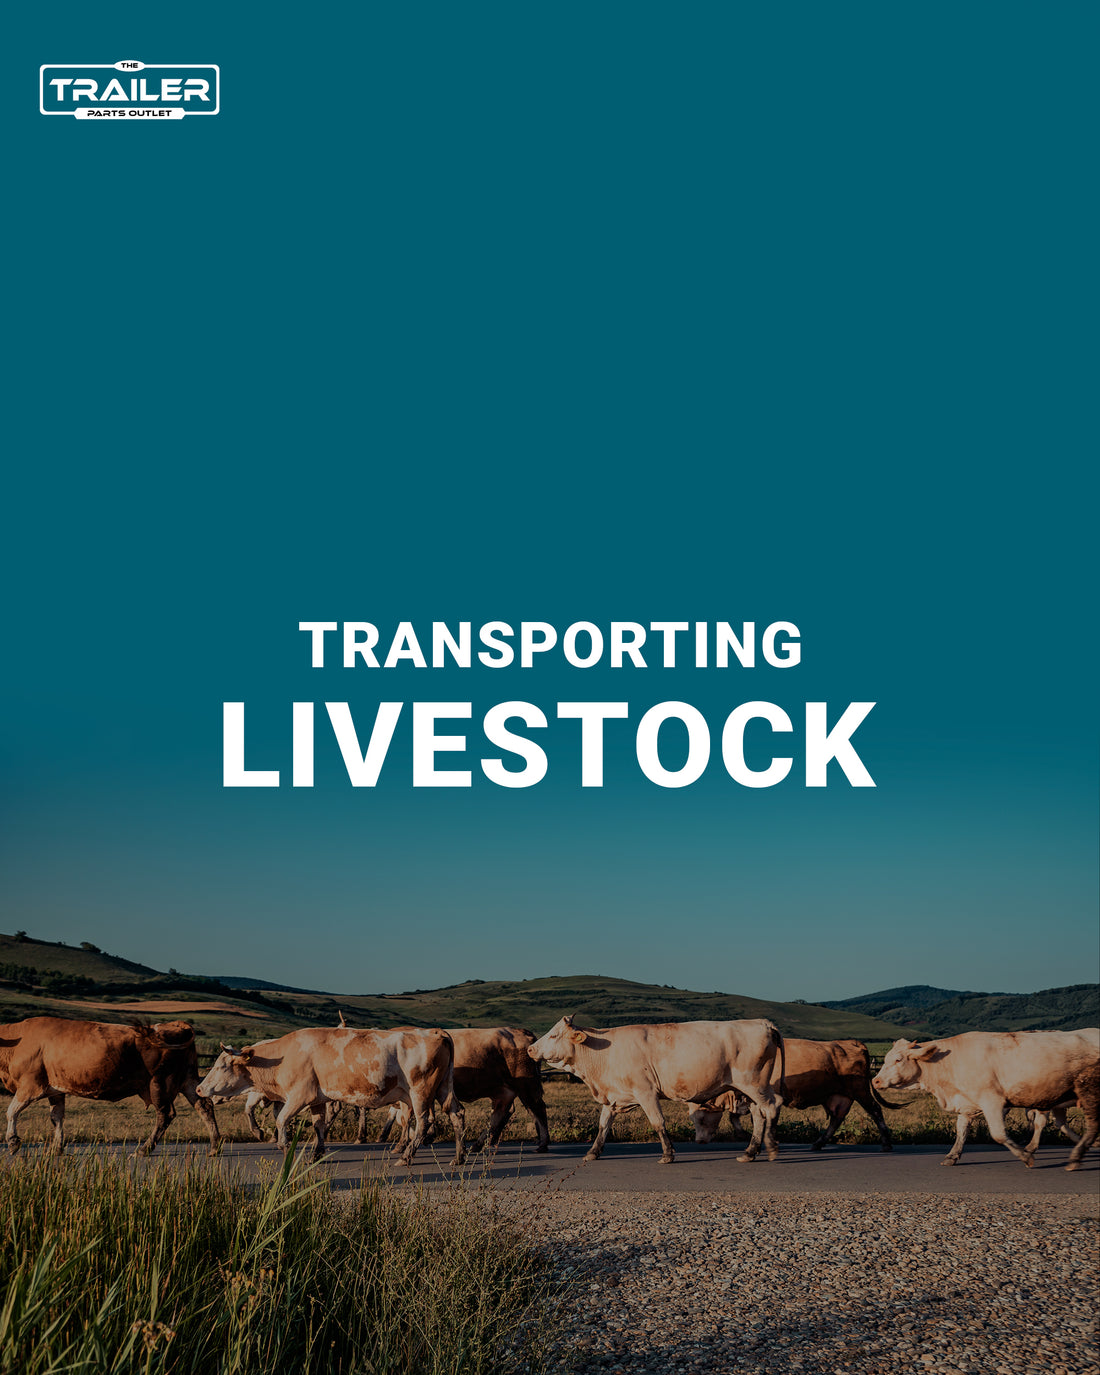 Livestock Trailer | The Trailer Parts Outlet